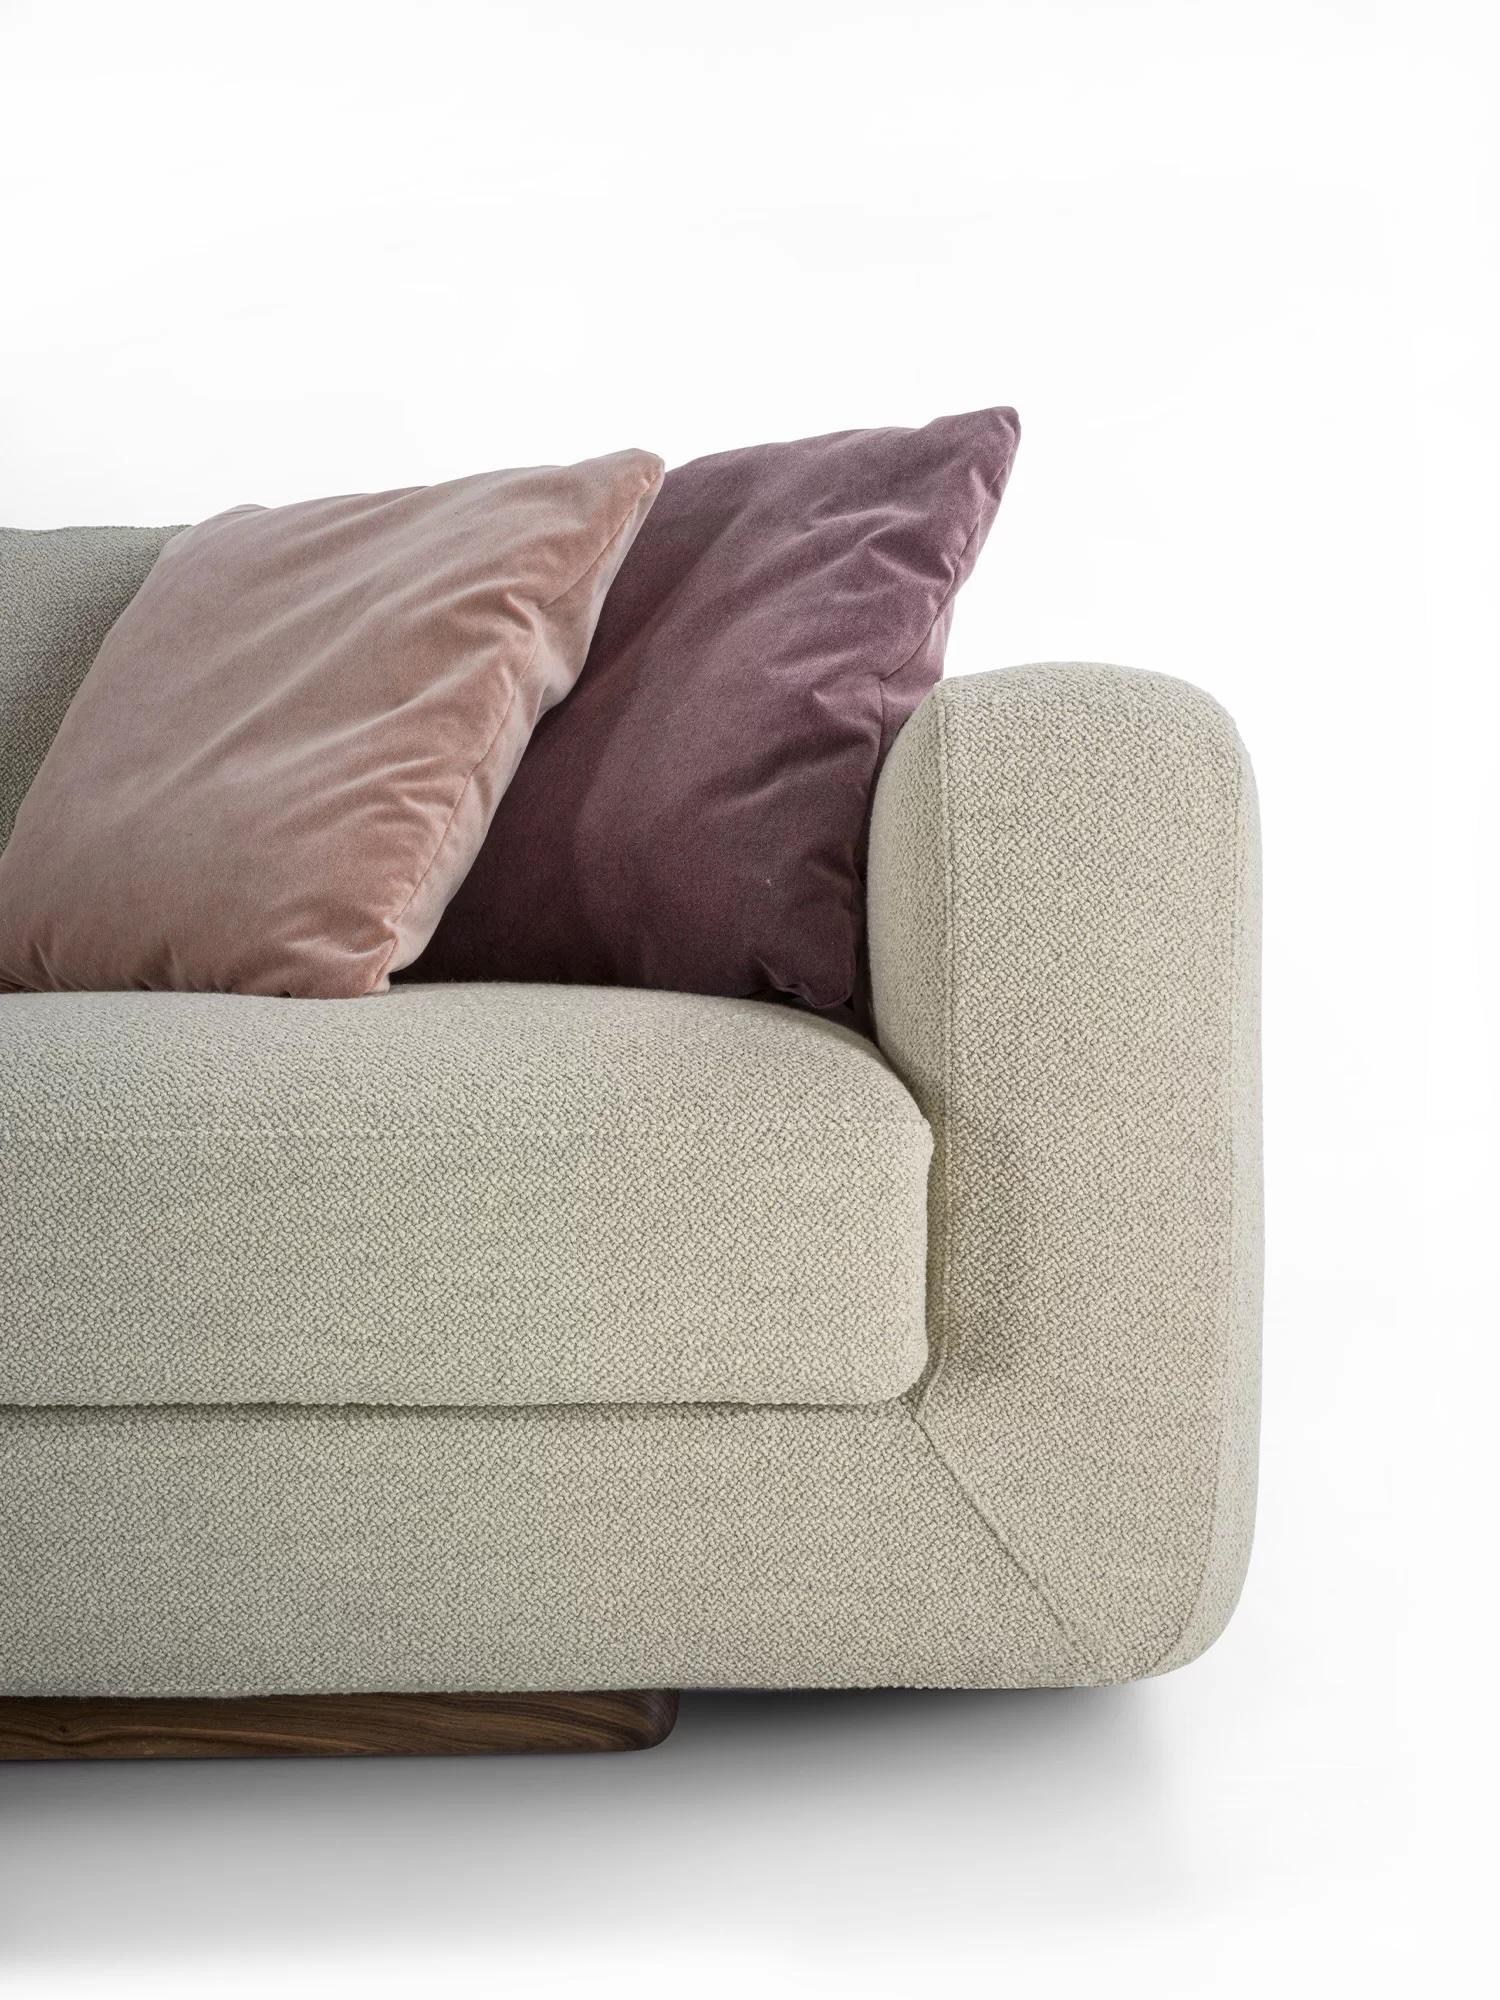 Contemporary Sospiro Sofa, Designed by Claudio Bellini, Made in Italy  For Sale